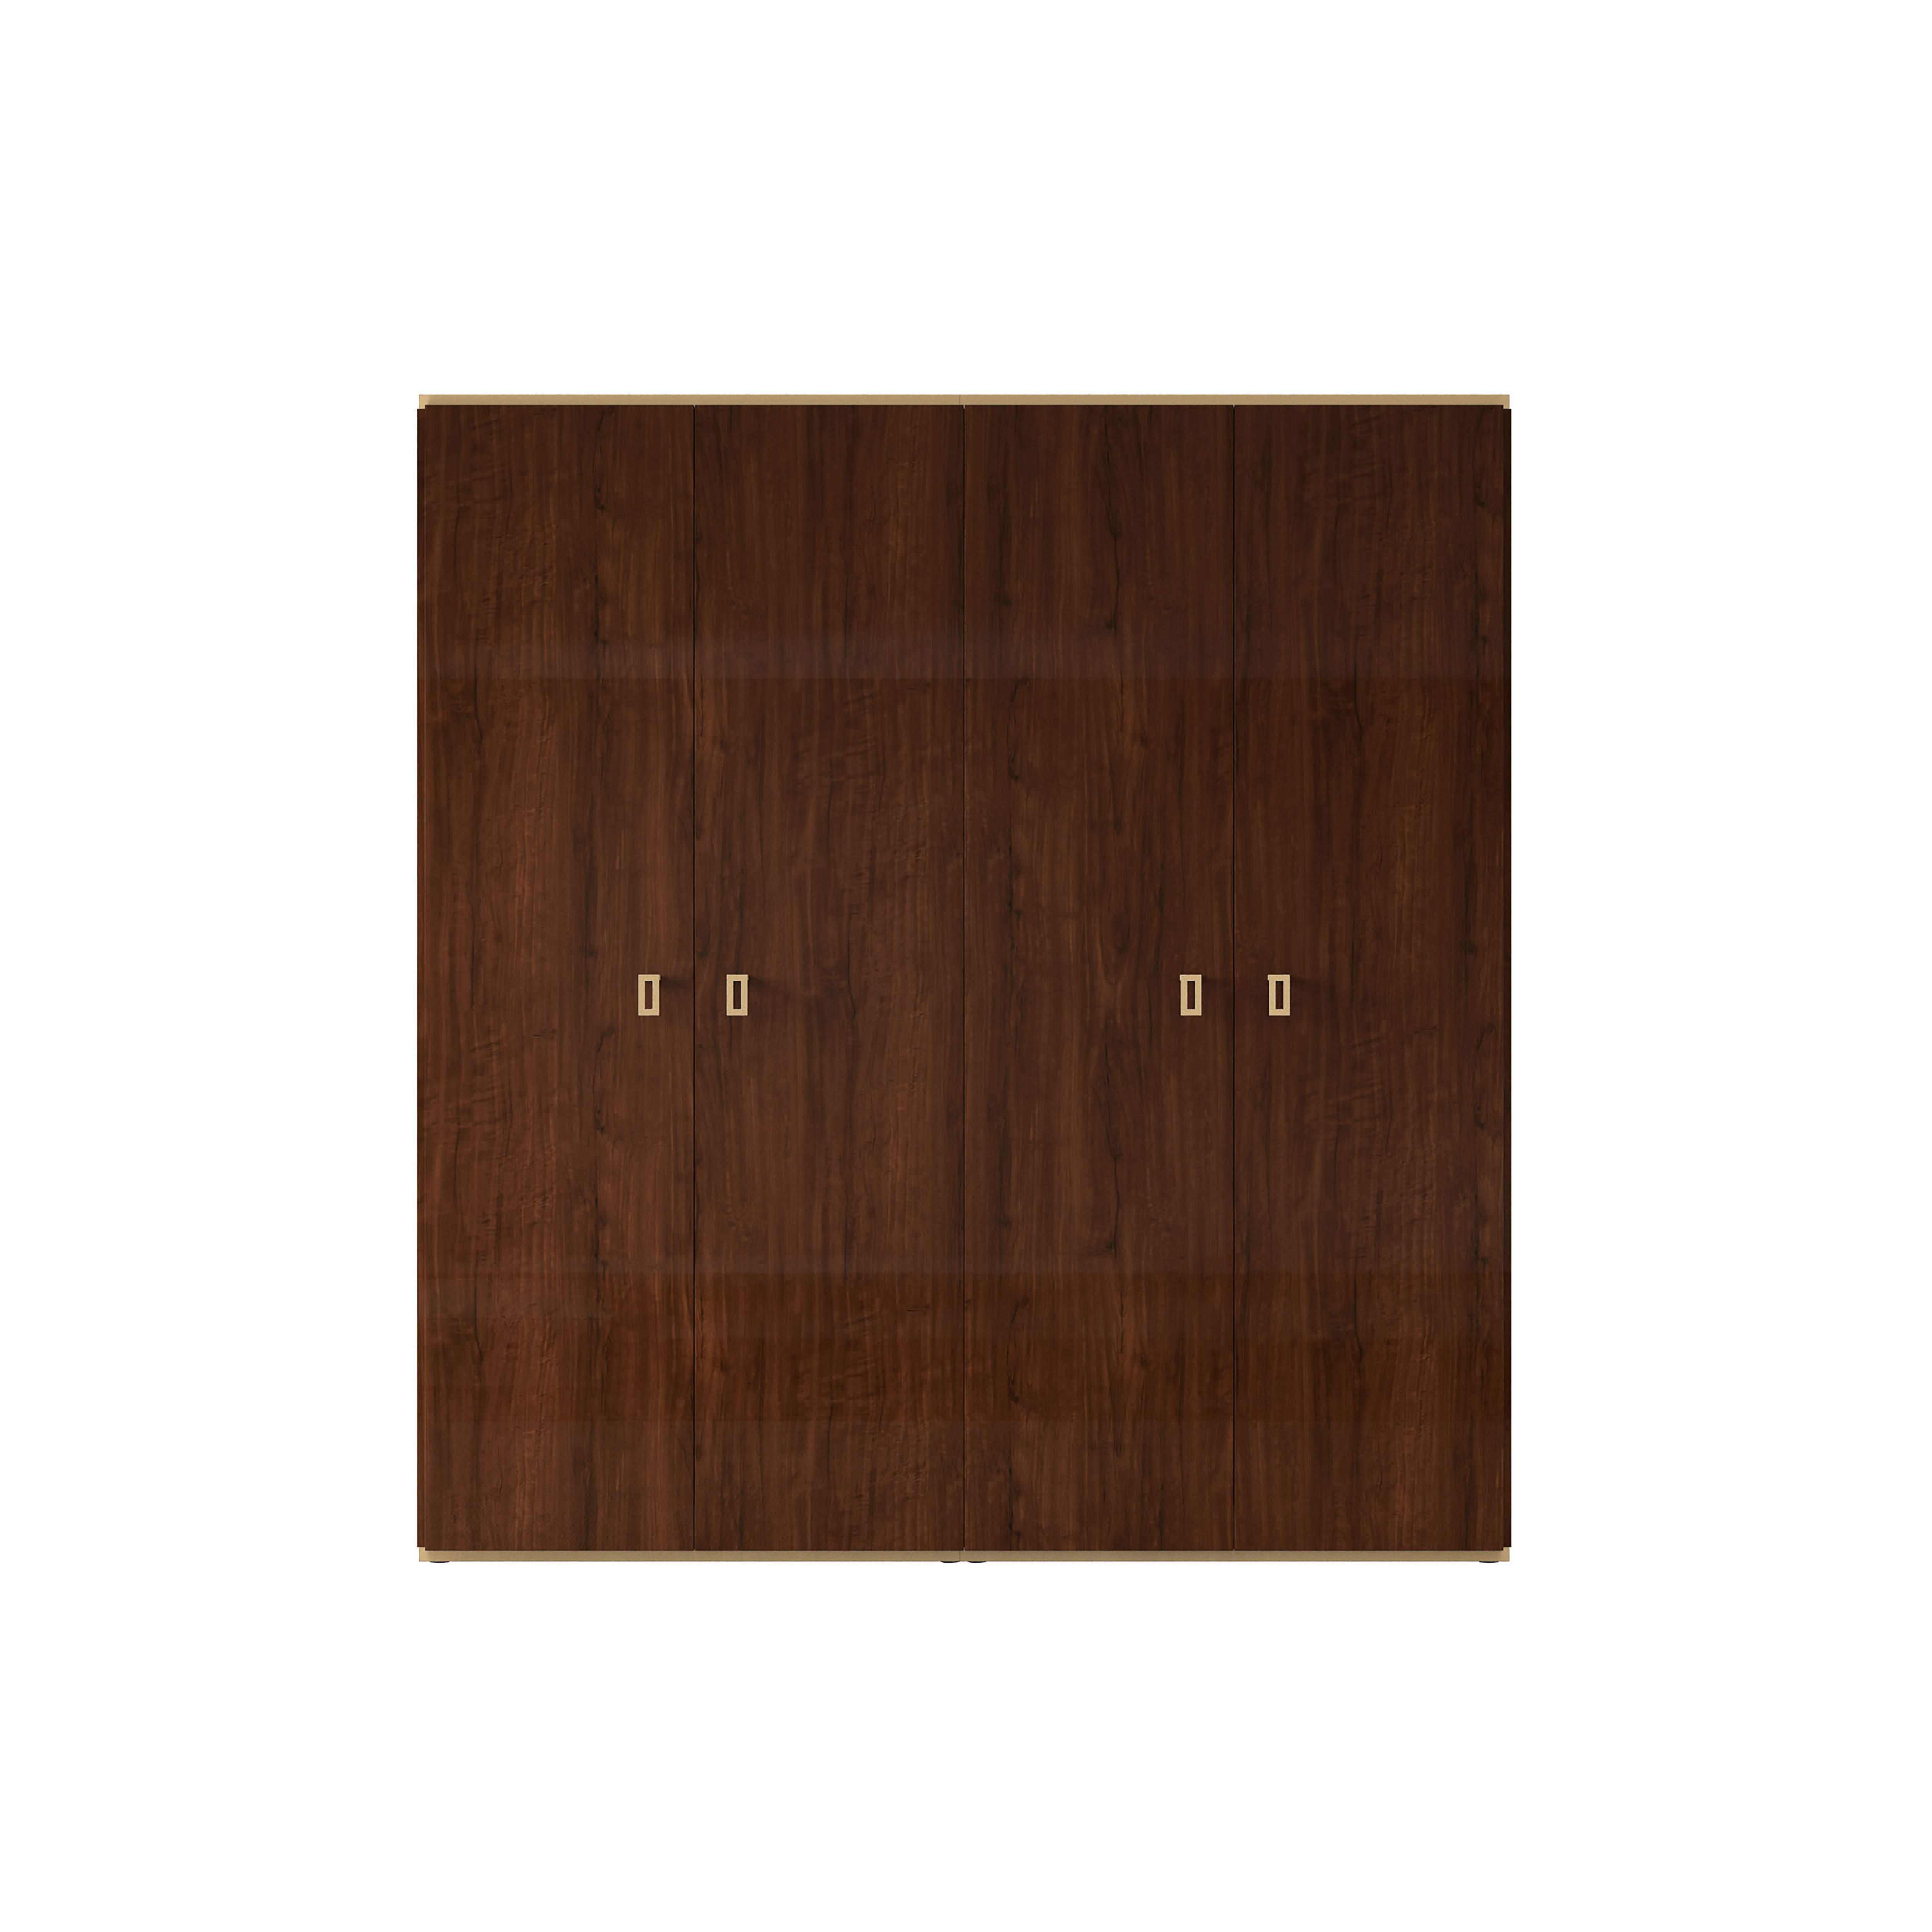 Шкаф Status Eva, четырёхдверный, цвет орех, 217x61x232 см (EABNOAR01)EABNOAR01